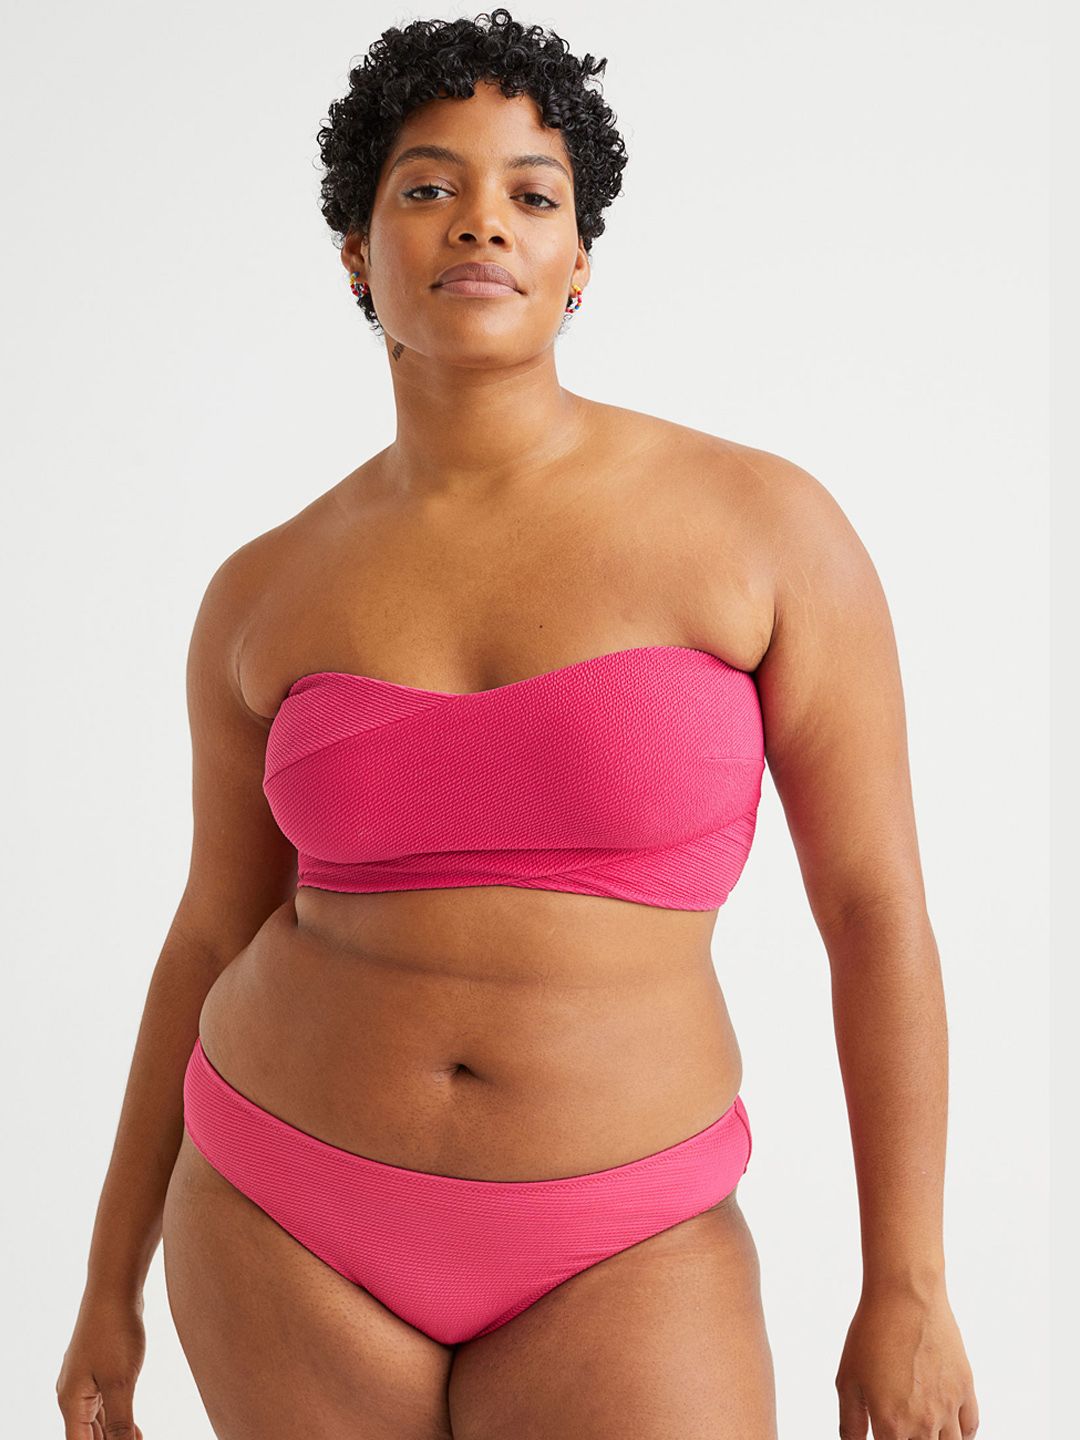 H&M Plus Size Women Pink Bikini Bottoms 1050299001 Price in India